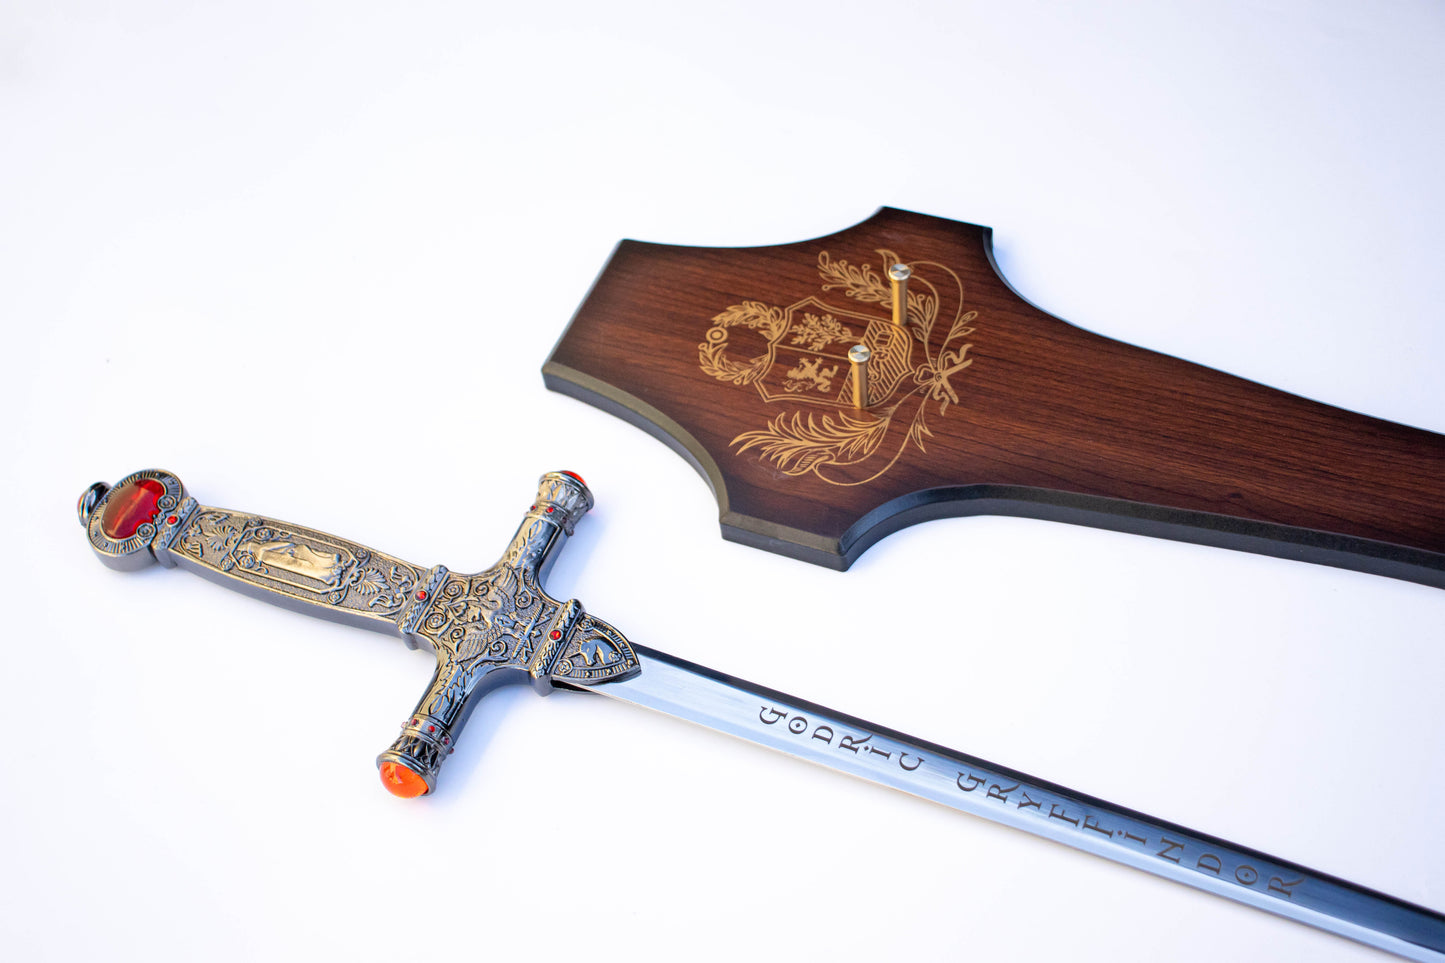 HARRY POTTER – THE SWORD OF GRYFFINDOR